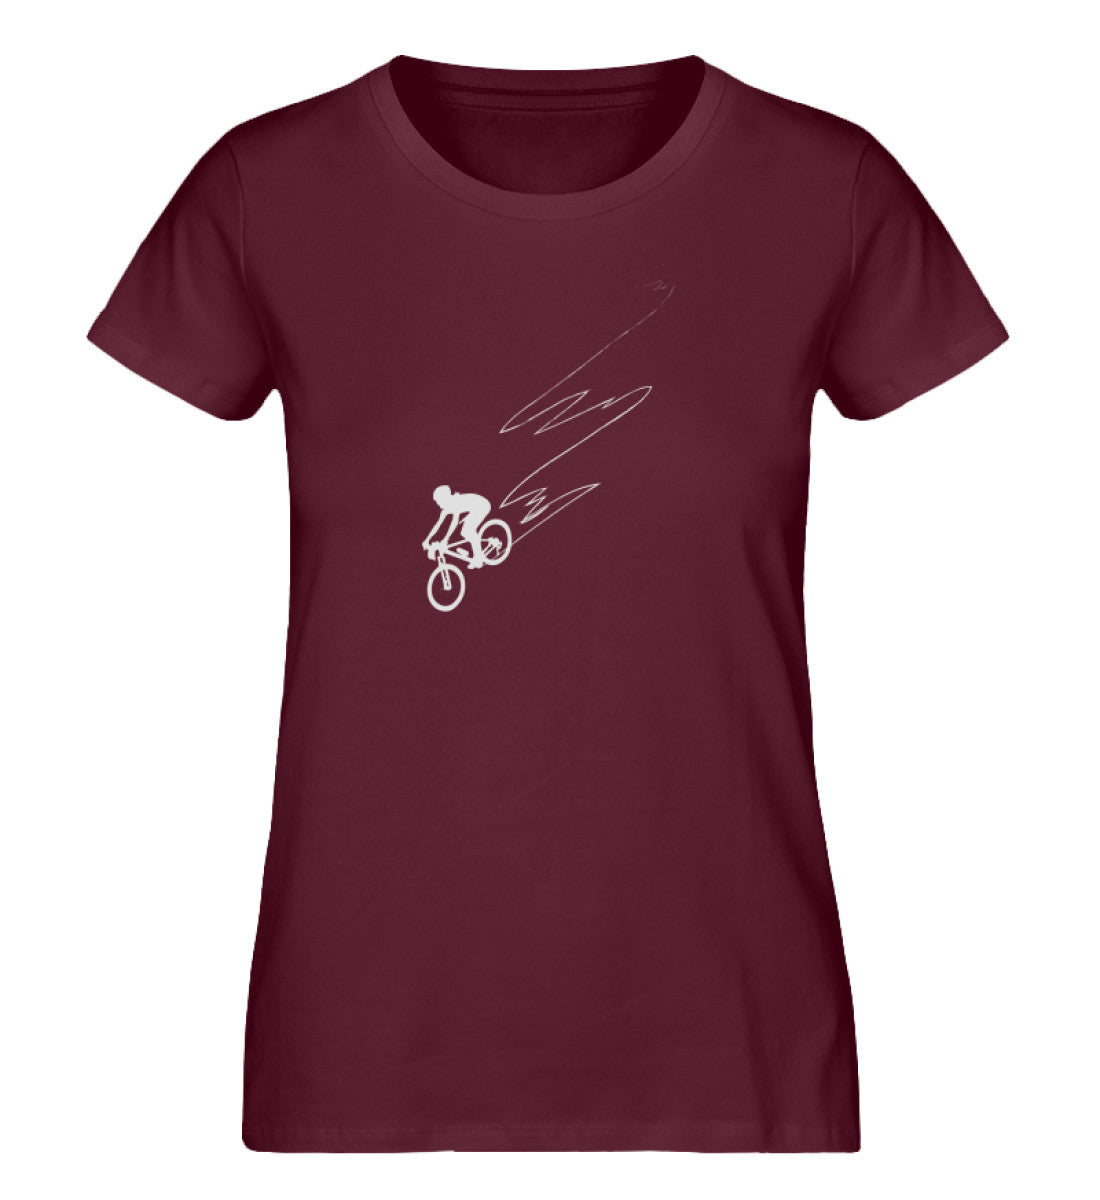 Downhill Flitzerin - Damen Organic T-Shirt fahrrad mountainbike Weinrot